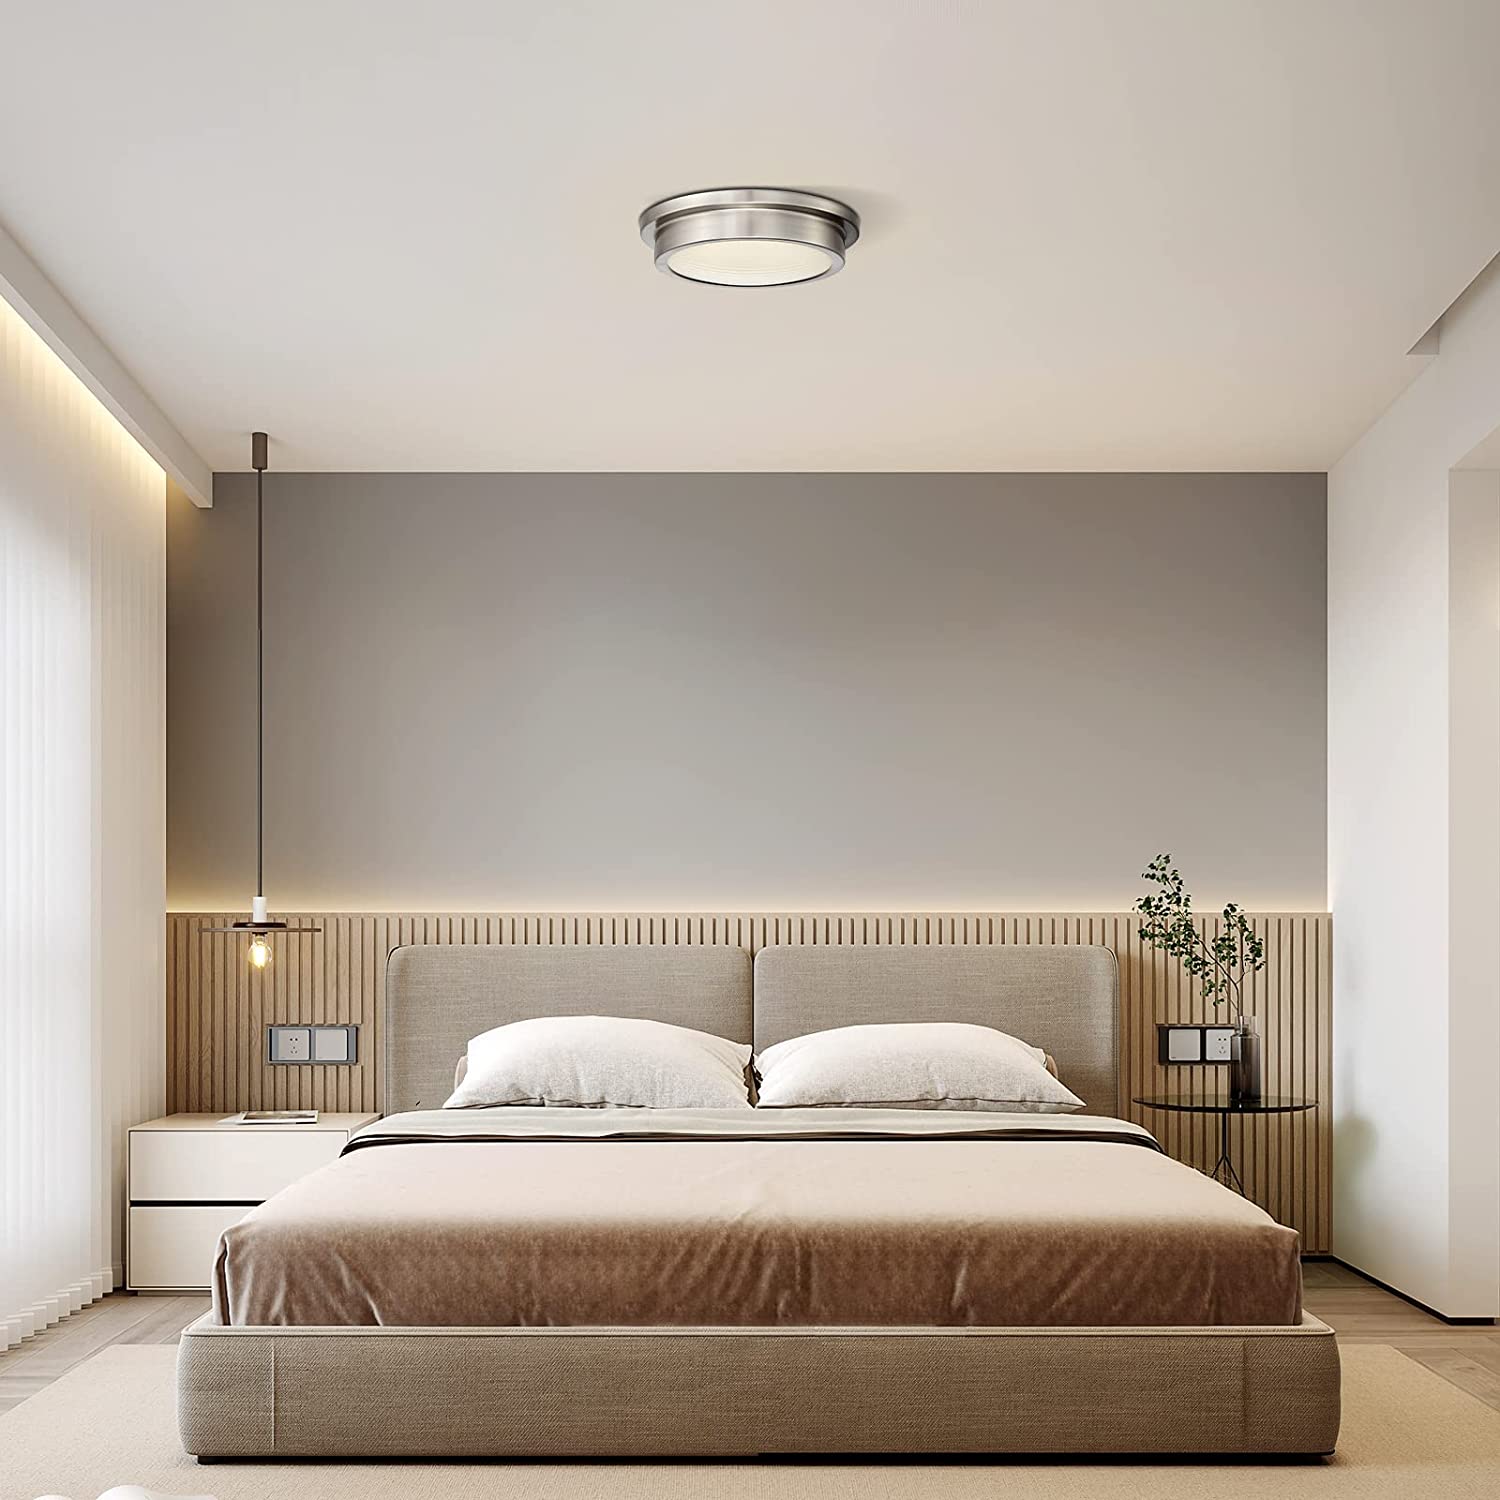 14 Inch LED Flush Mount Ceiling Light round flat panel LED ceiling lamp with nickel finish